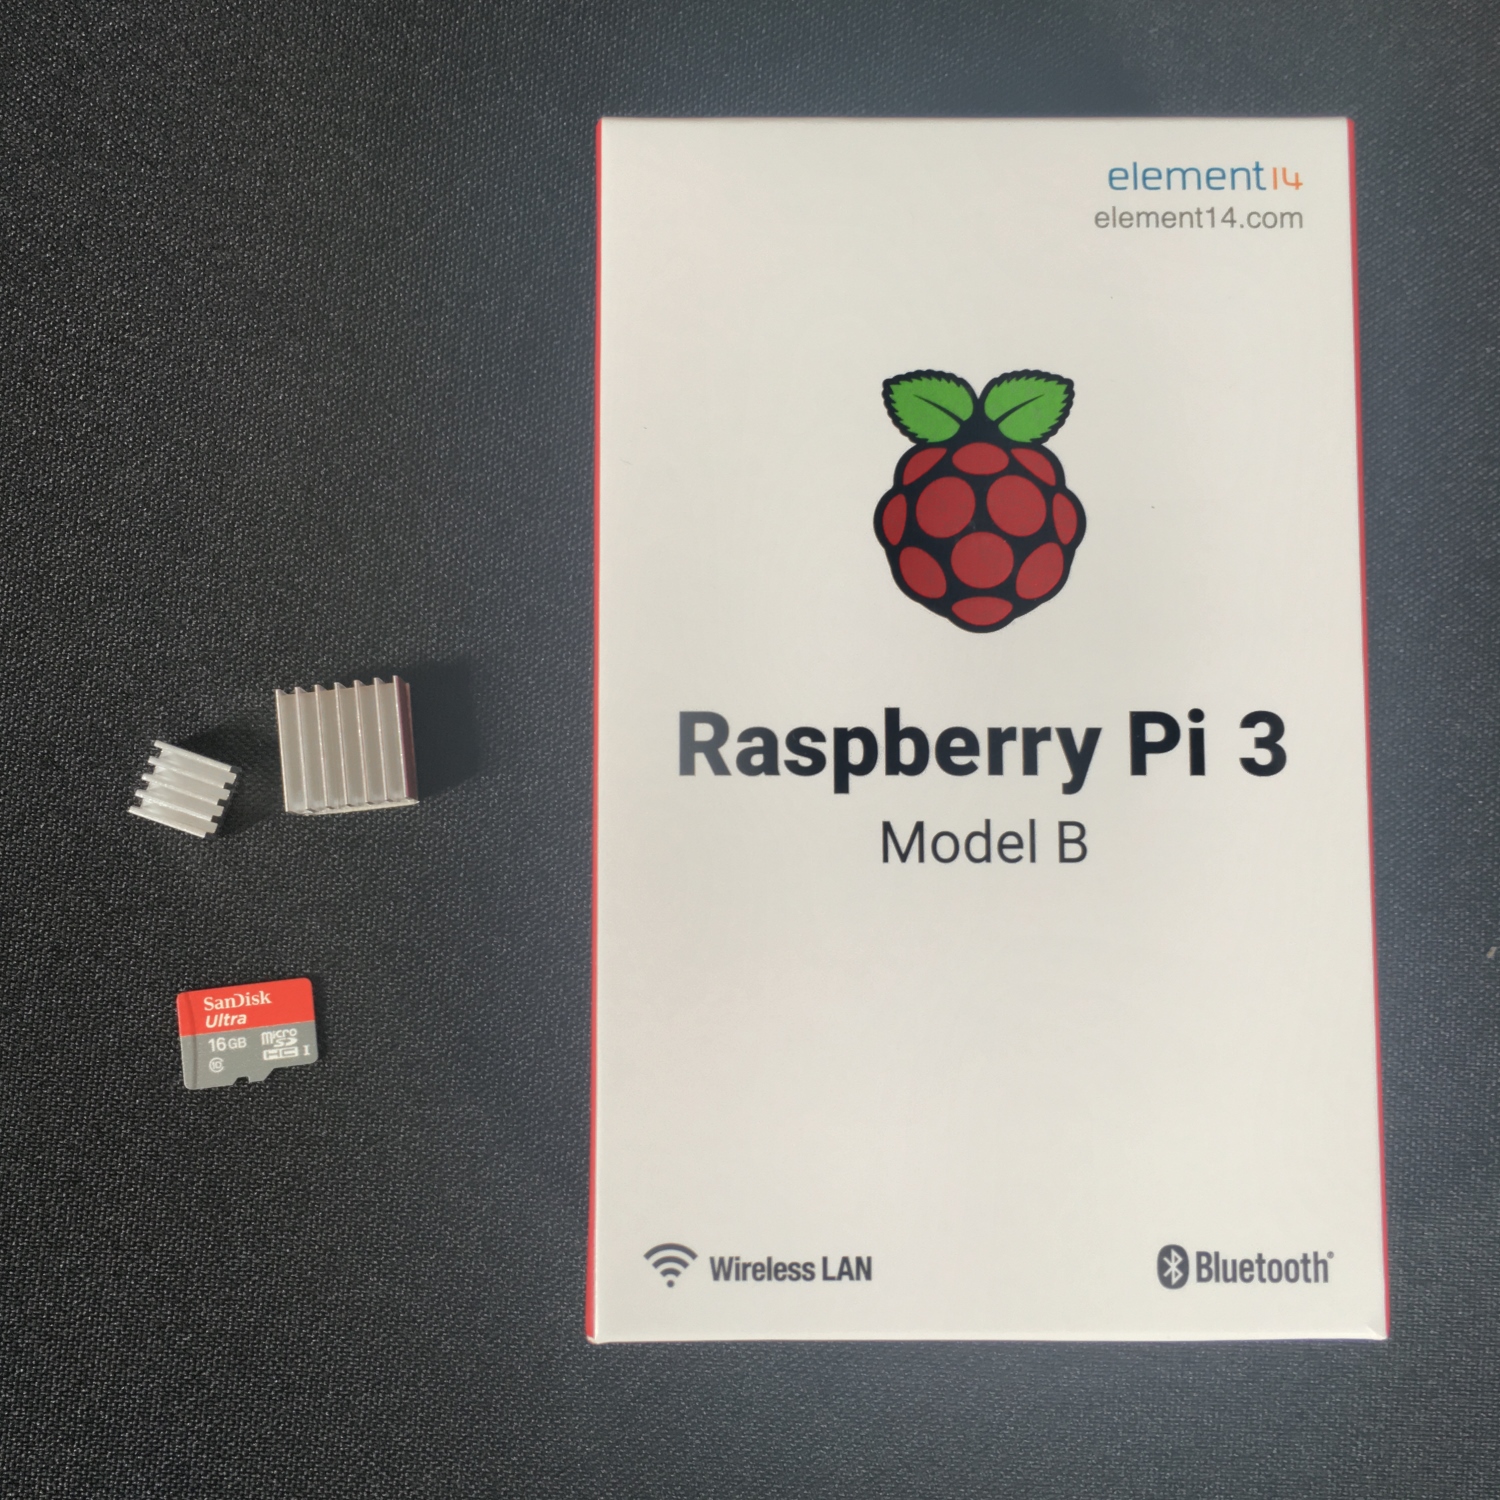 Raspberry Pi 3 Element 14 Box